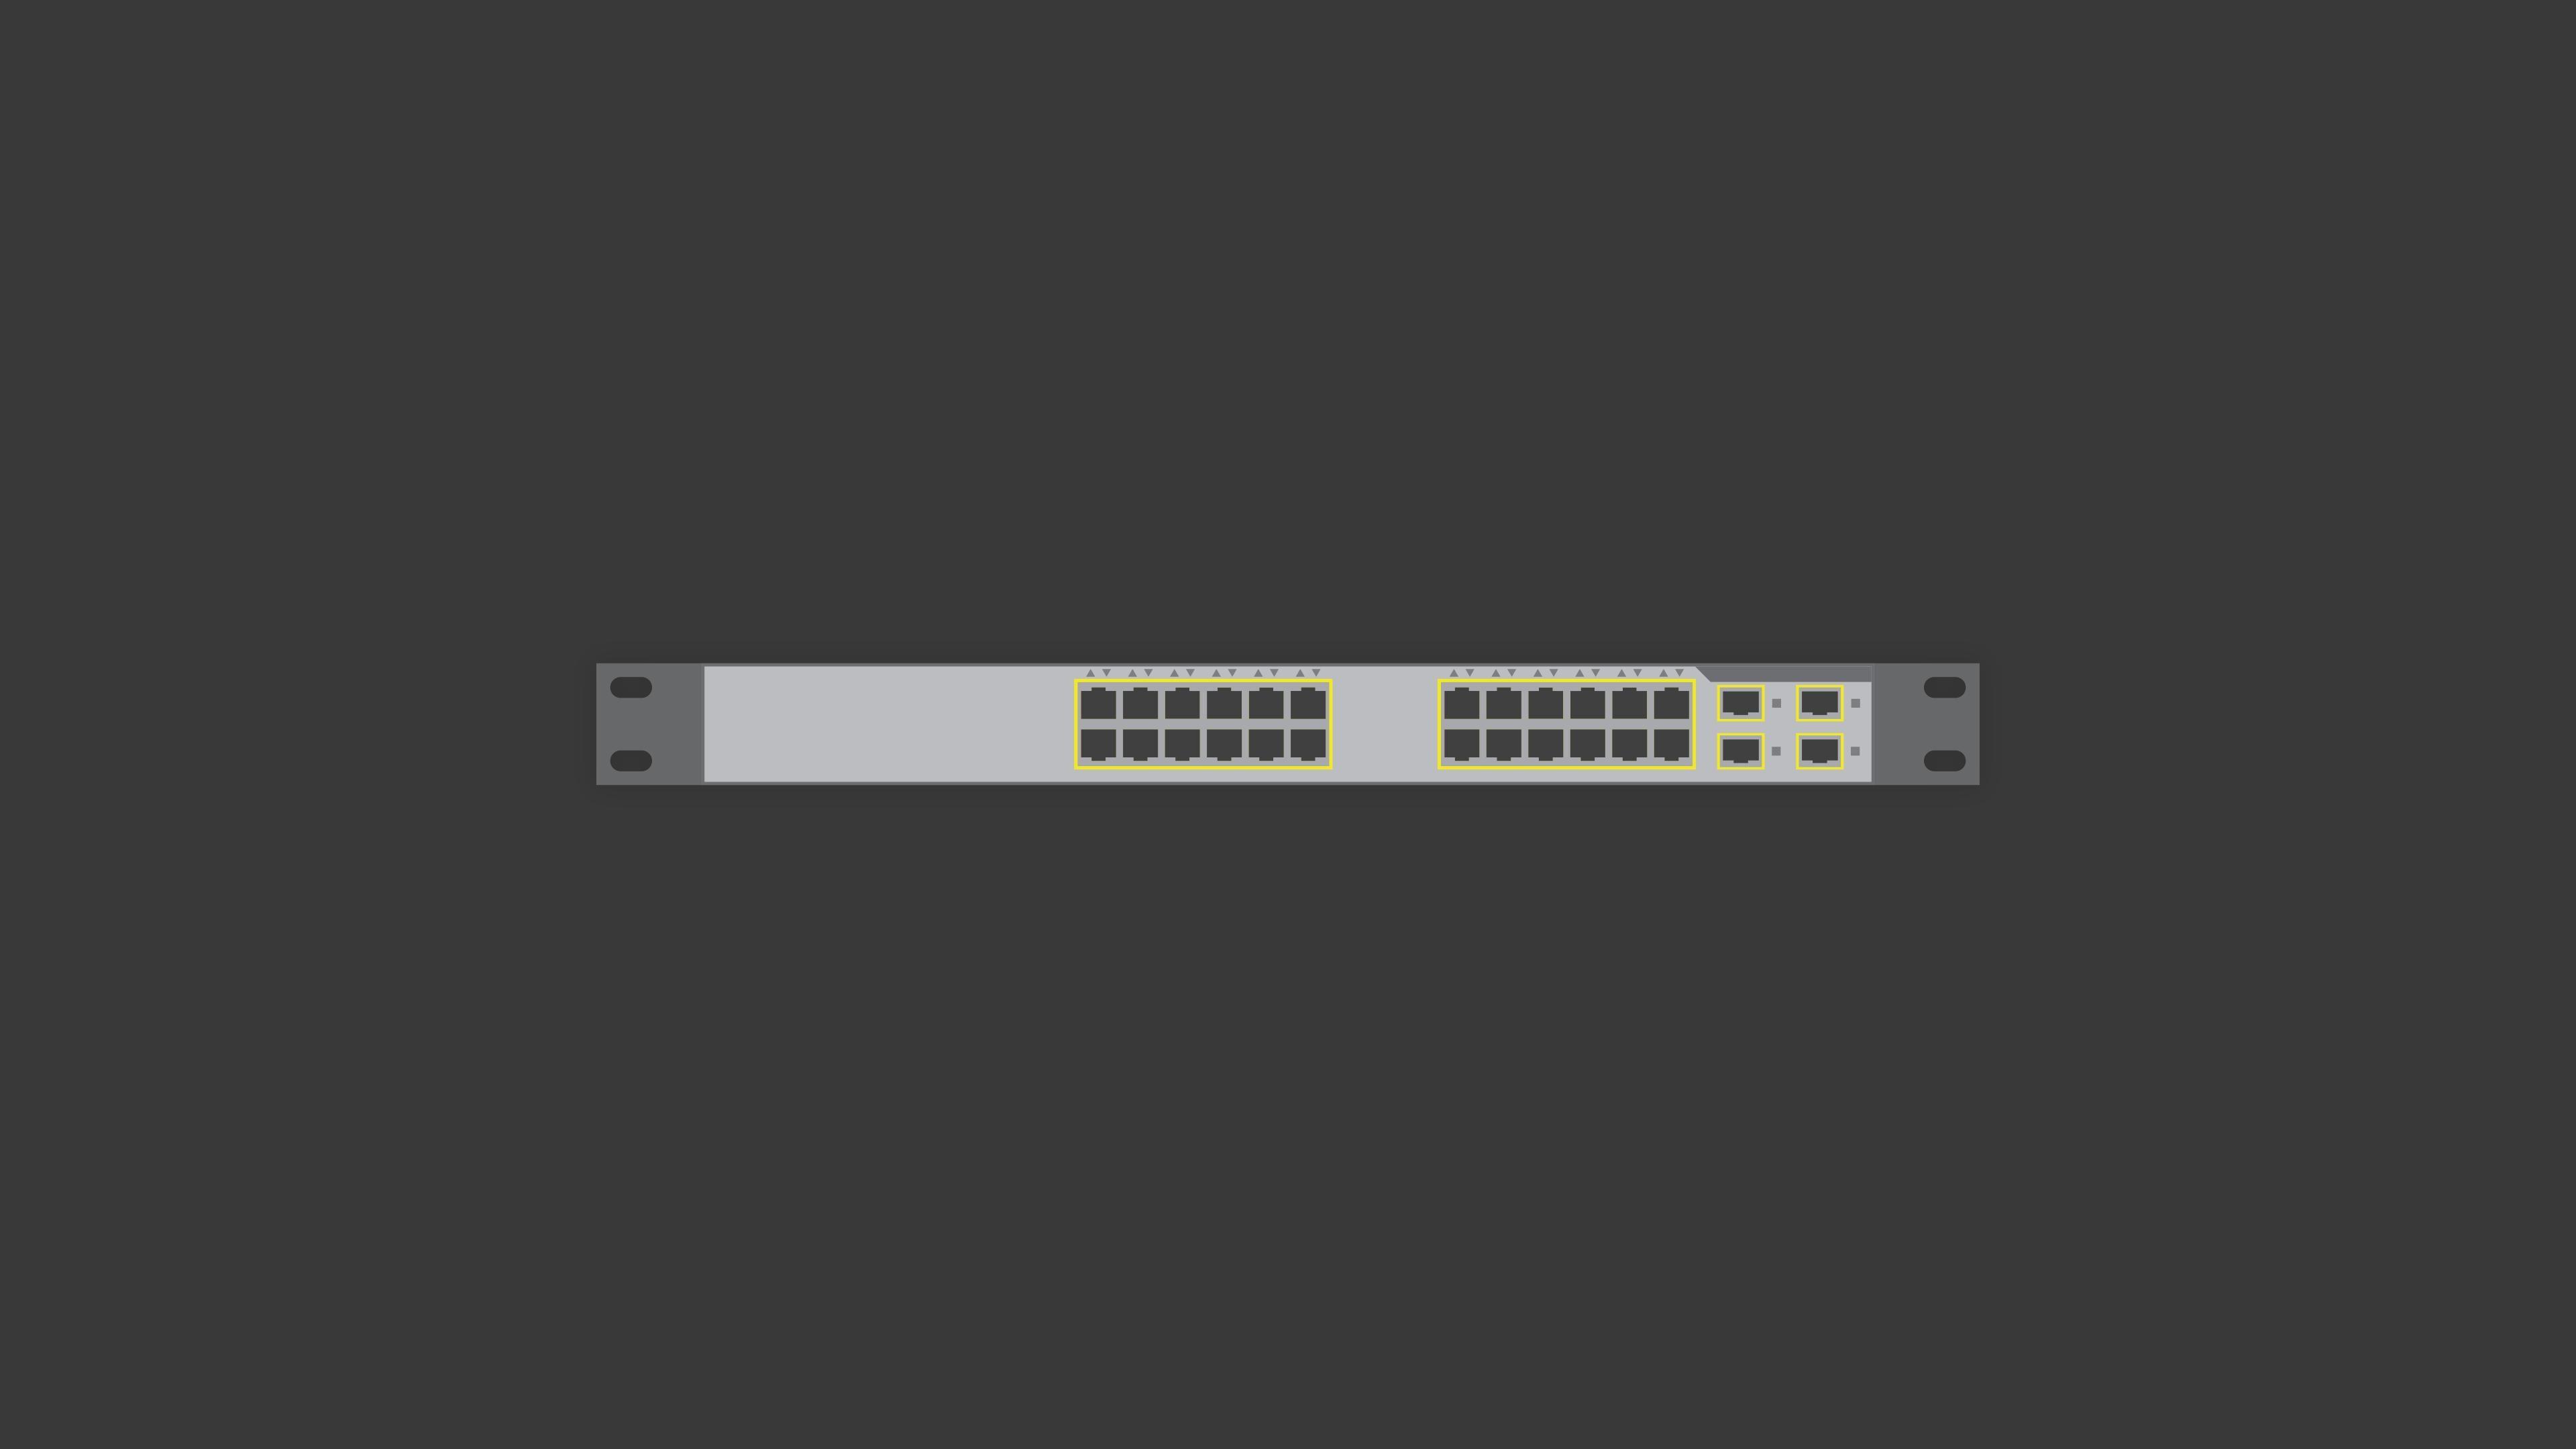 HP Sever & Cisco Router Wallpaper! [OC]